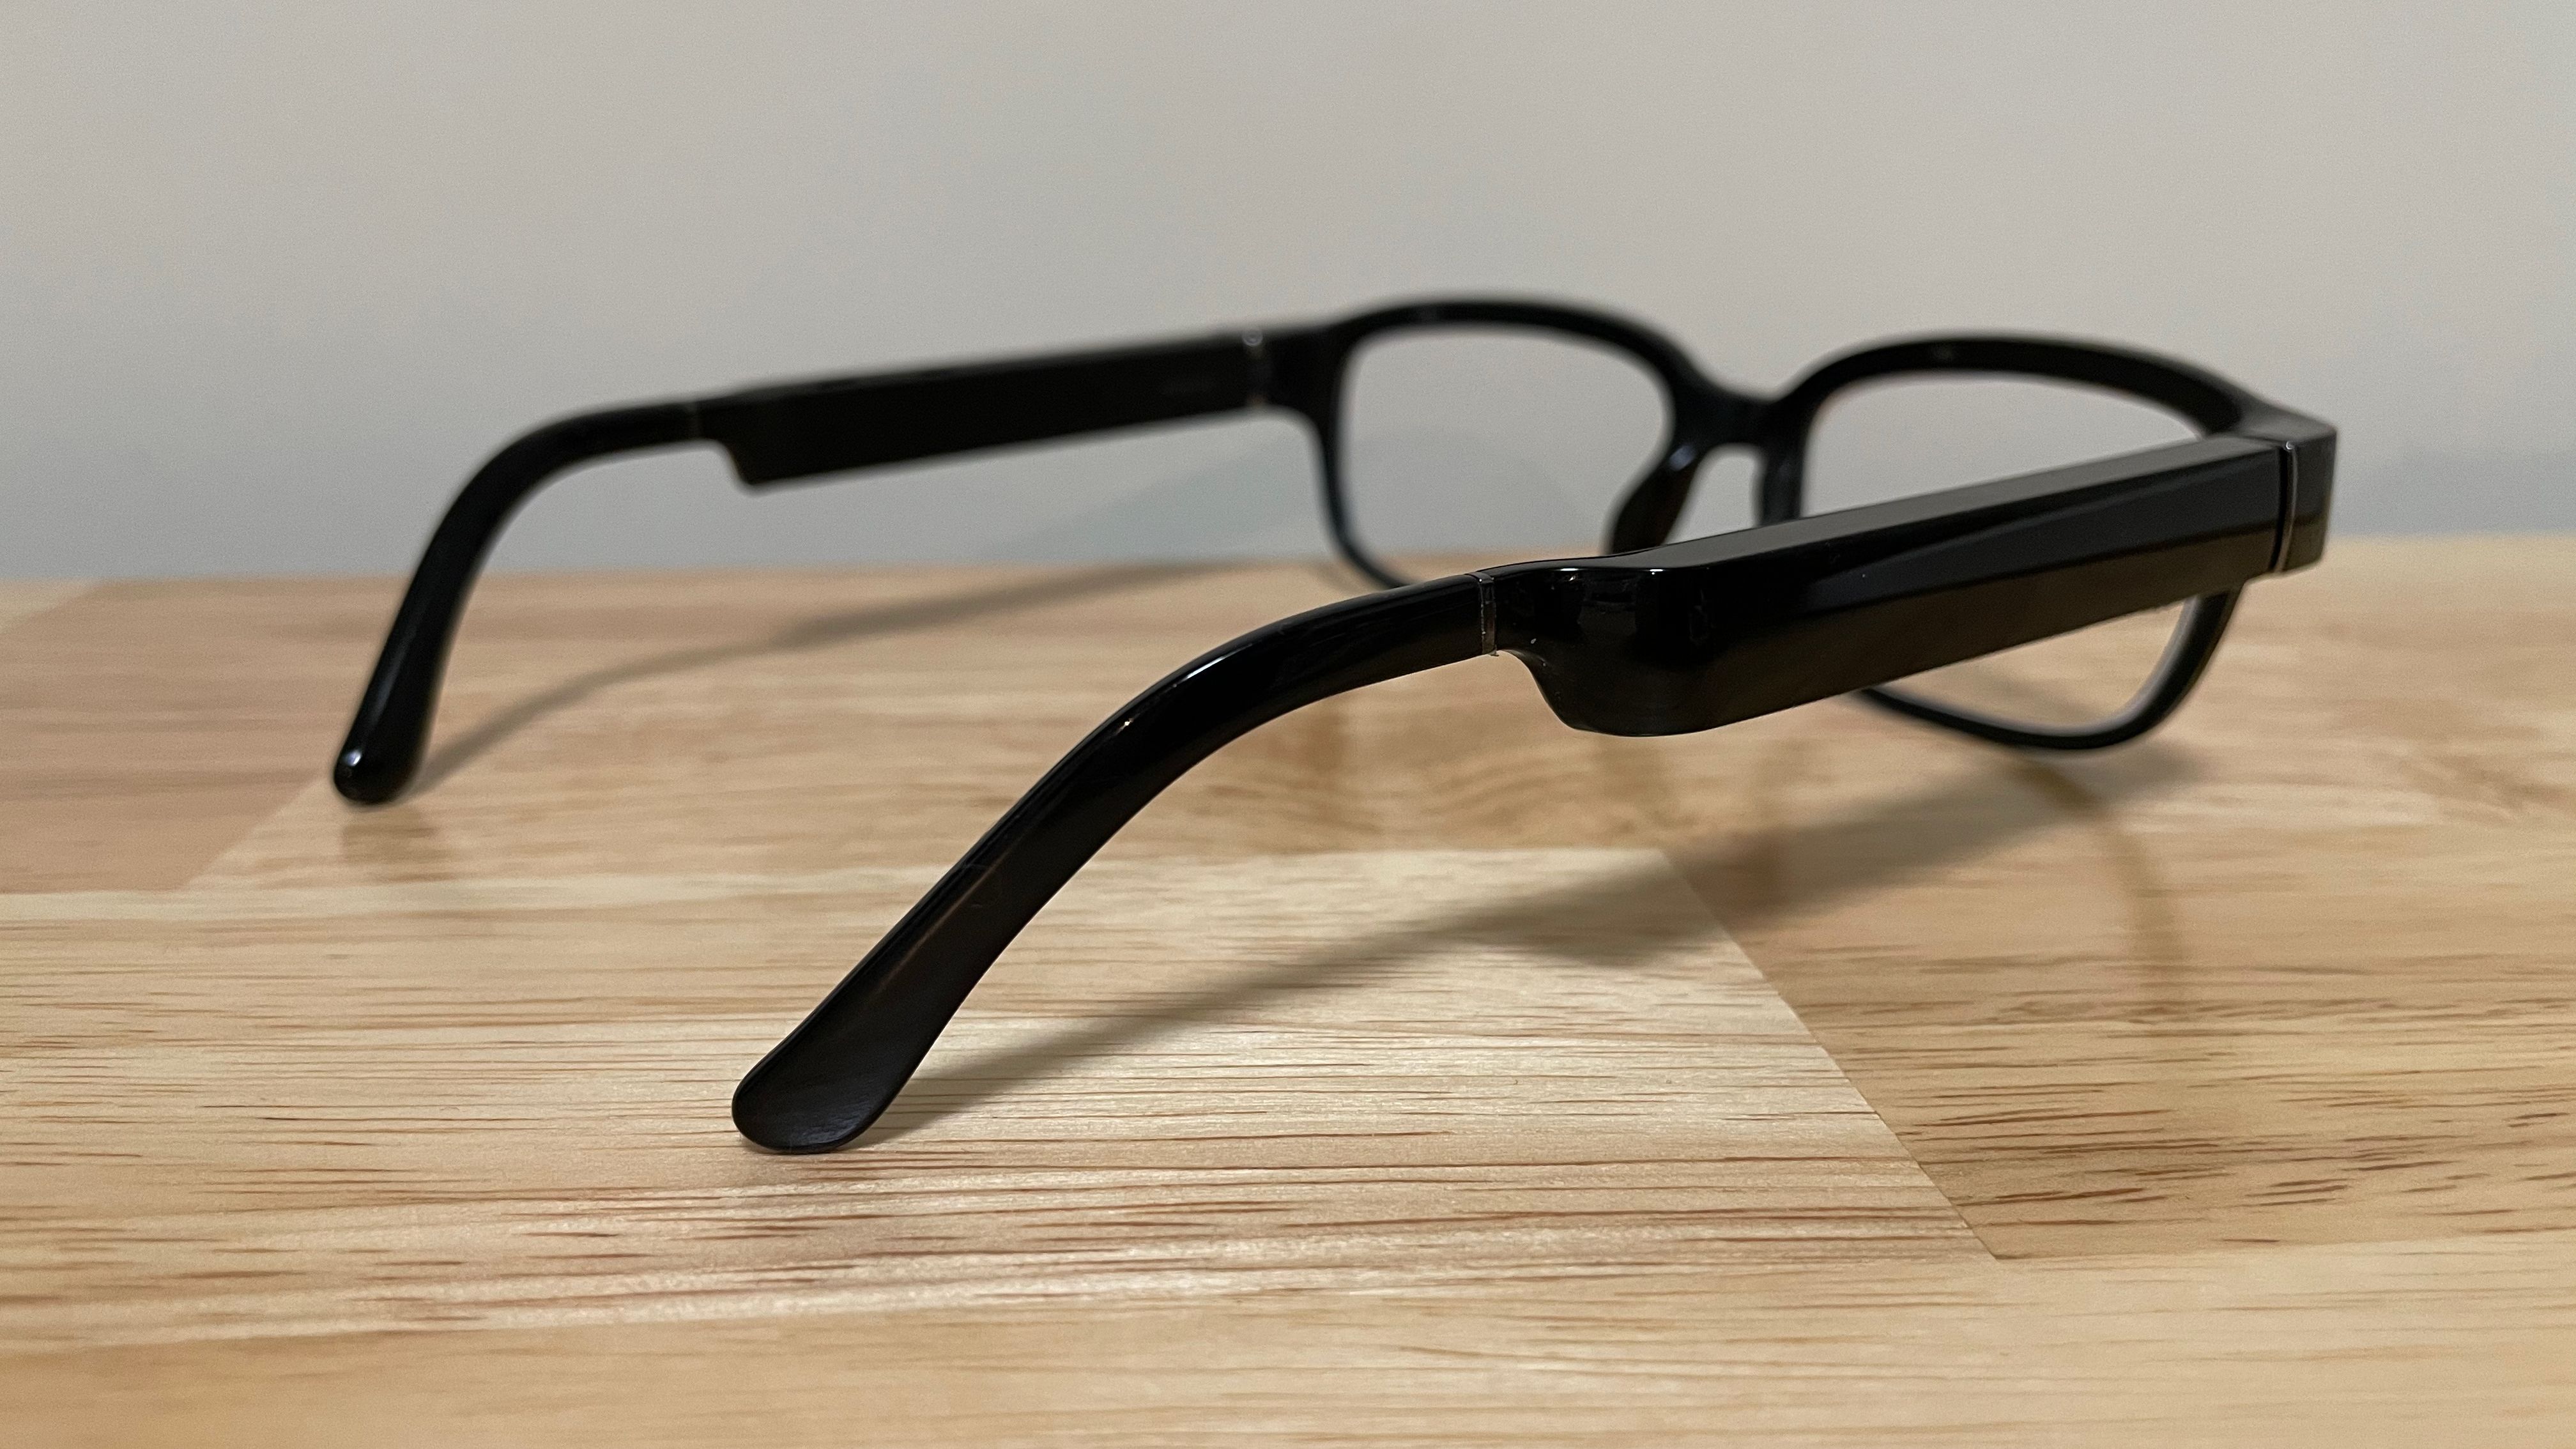 Echo Frames Hands-On: Alexa's Audio-Only Smart Glasses